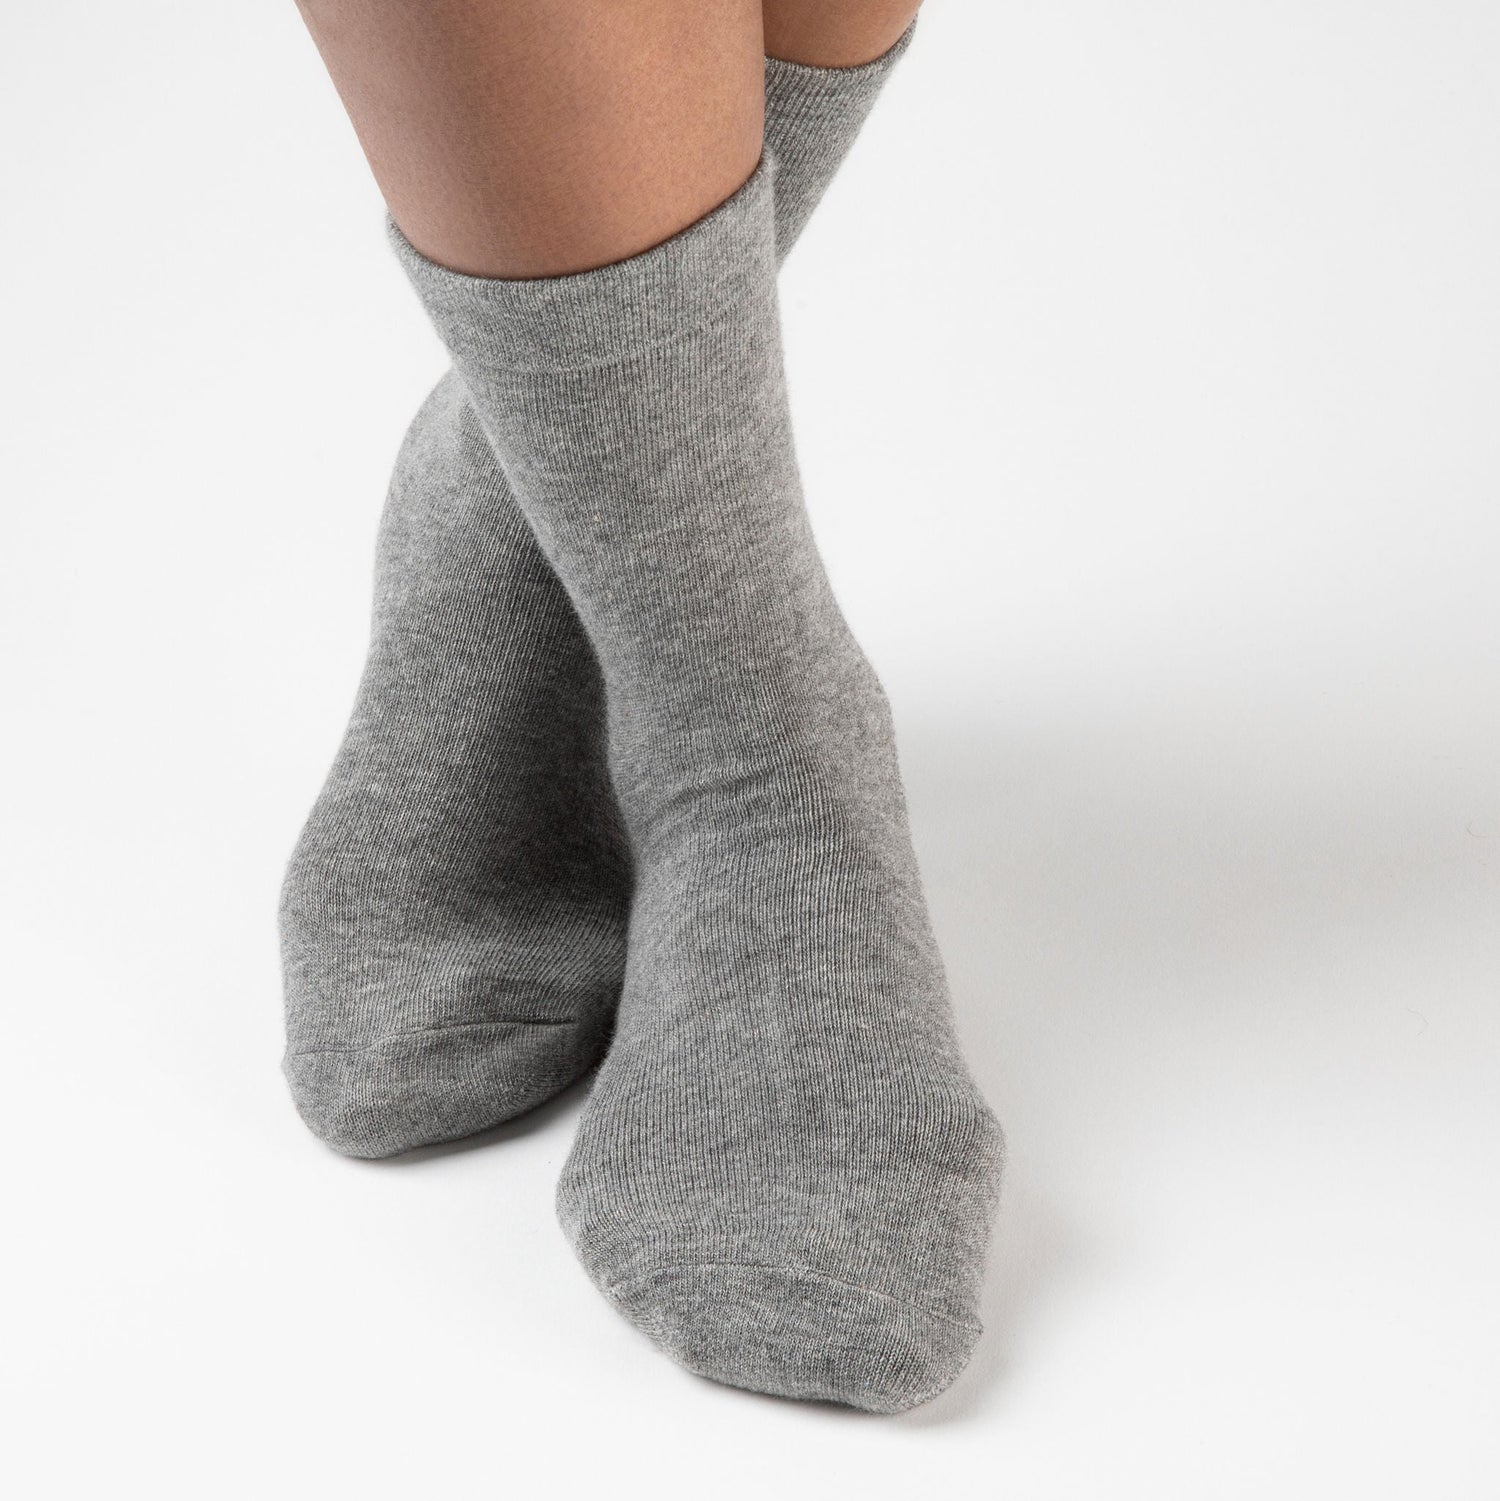 Model wearing light grey anti slip socks made of ultra soft luxury cotton blend.